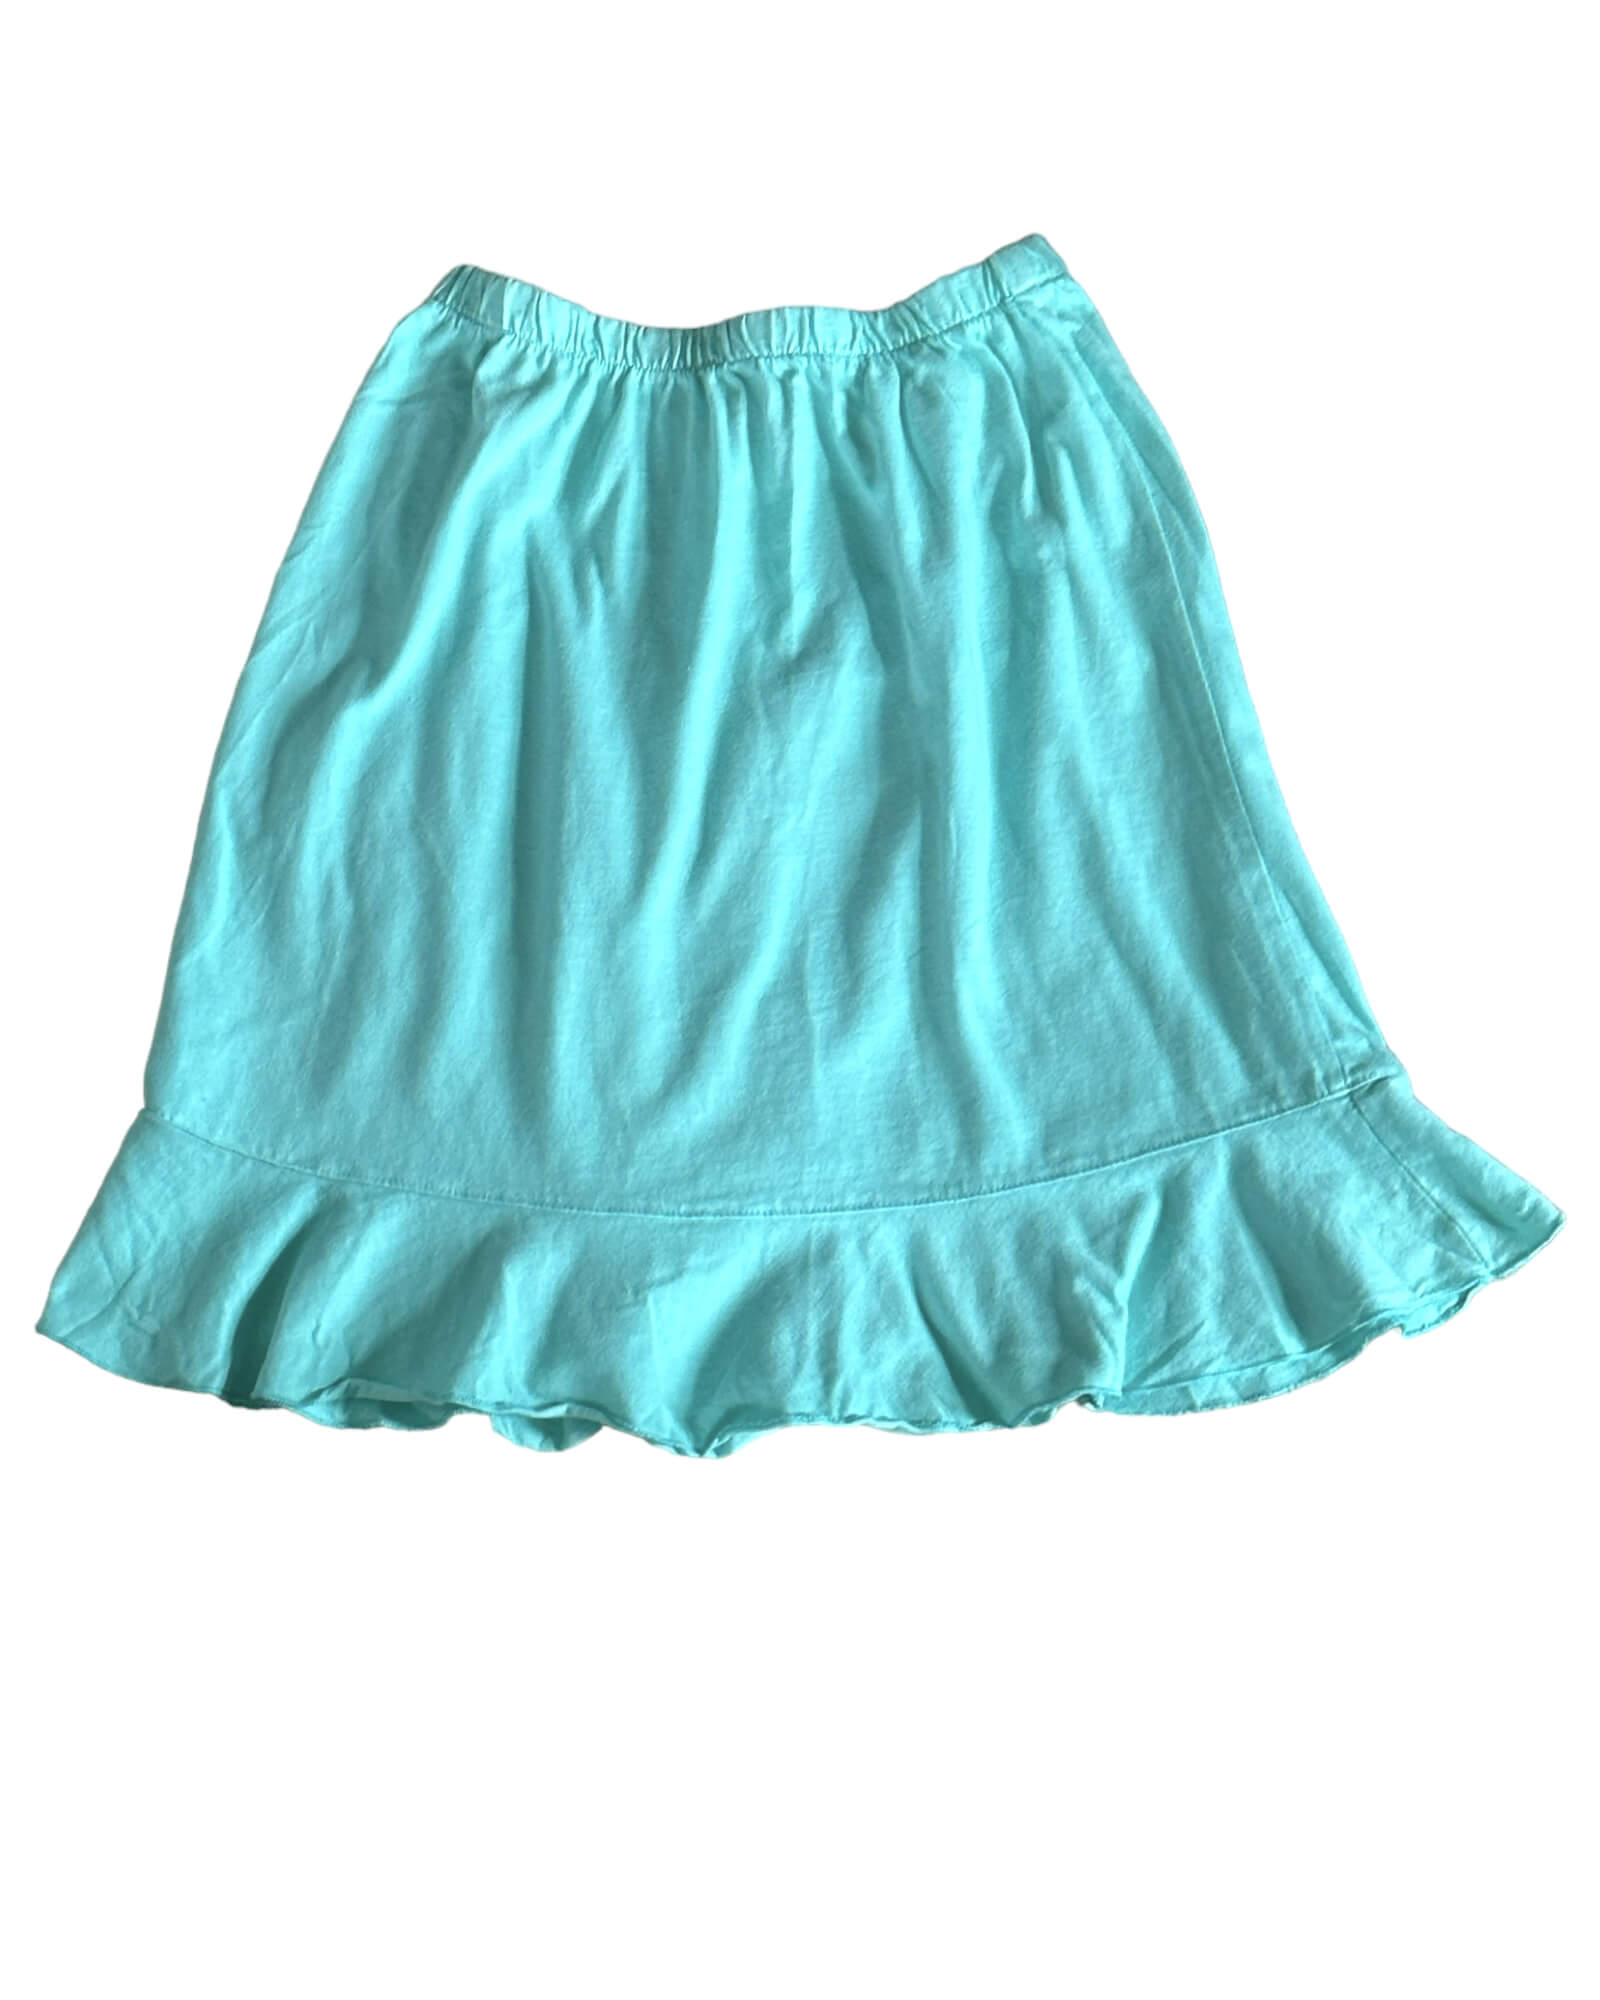 Light Spring I CAN TOO resort wear sea glass blue knit ruffle skirt